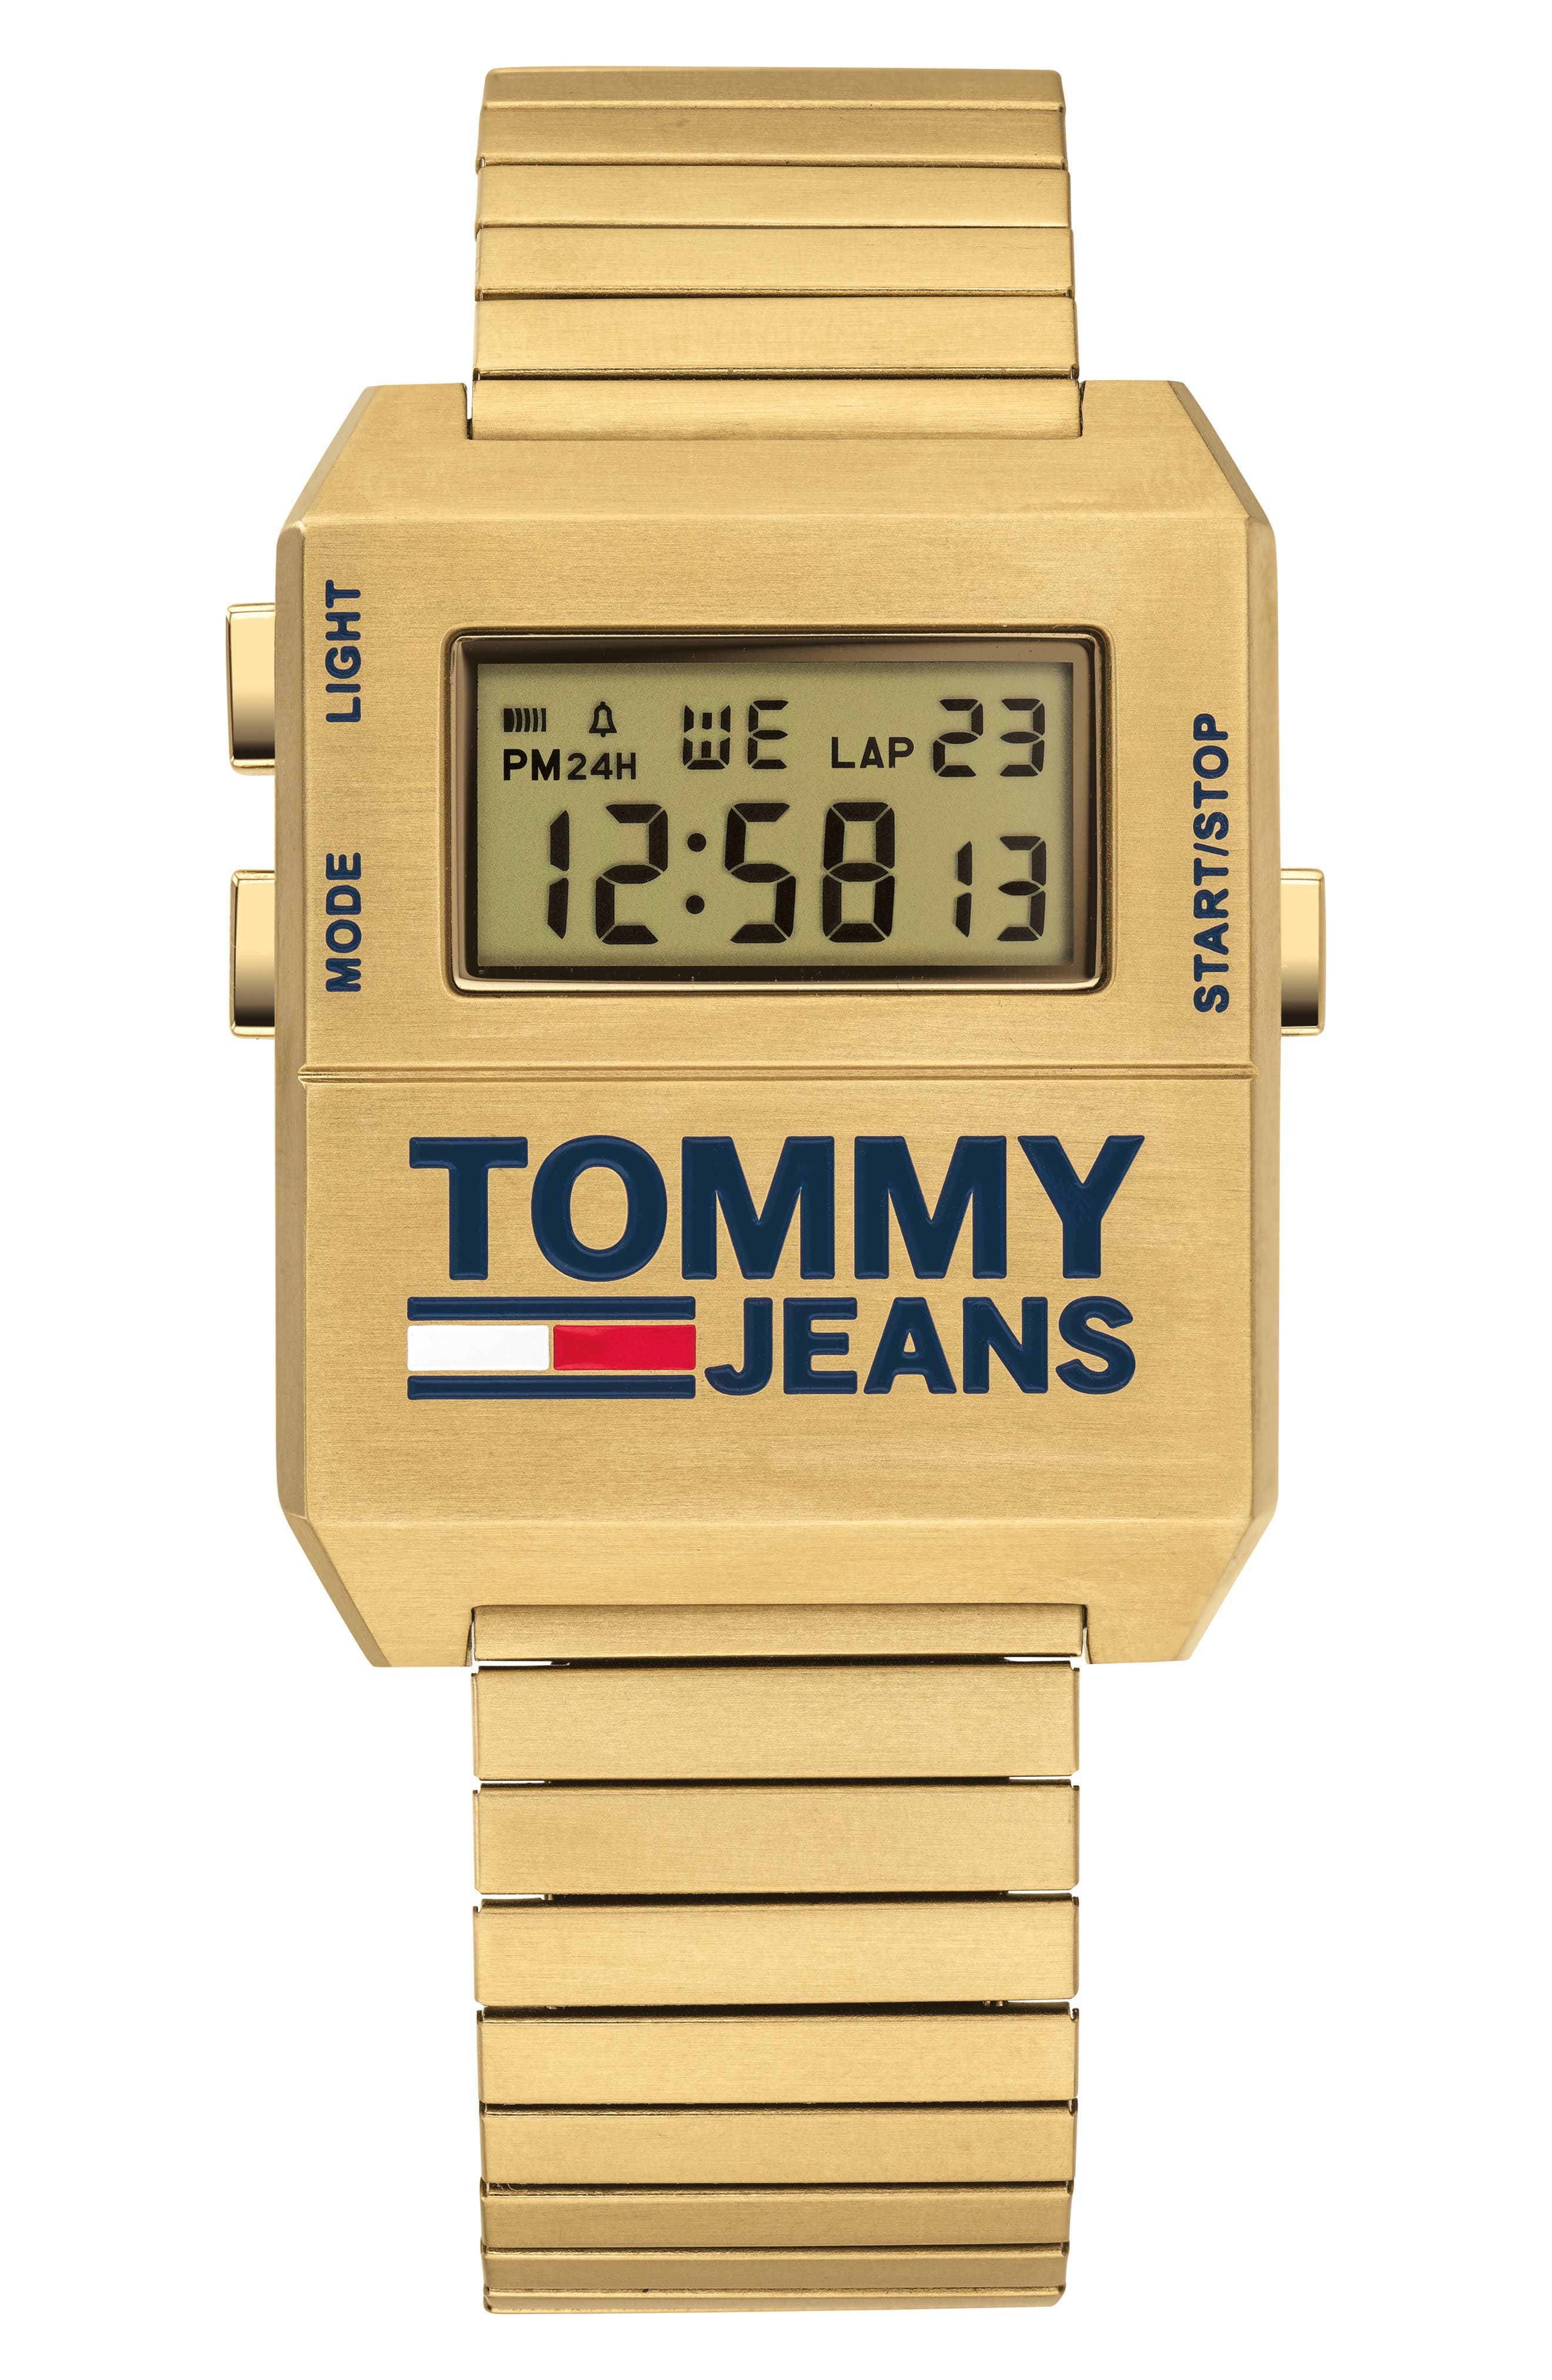 tommy hilfiger watches digital